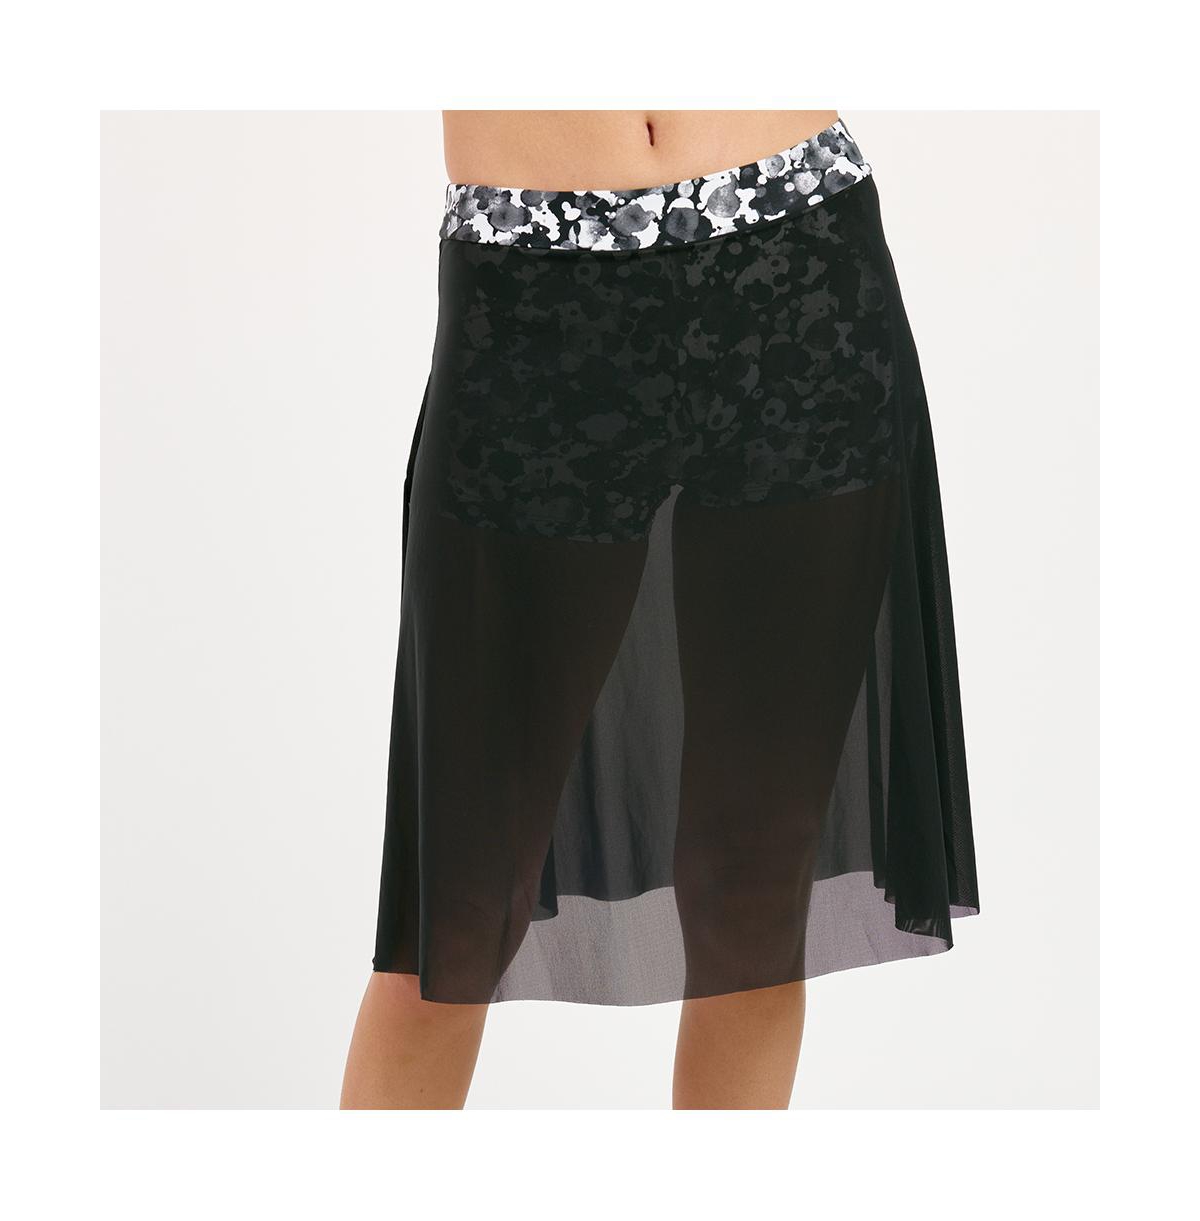 Women's Bay Skirt- 3 Way Wear - Dark jade